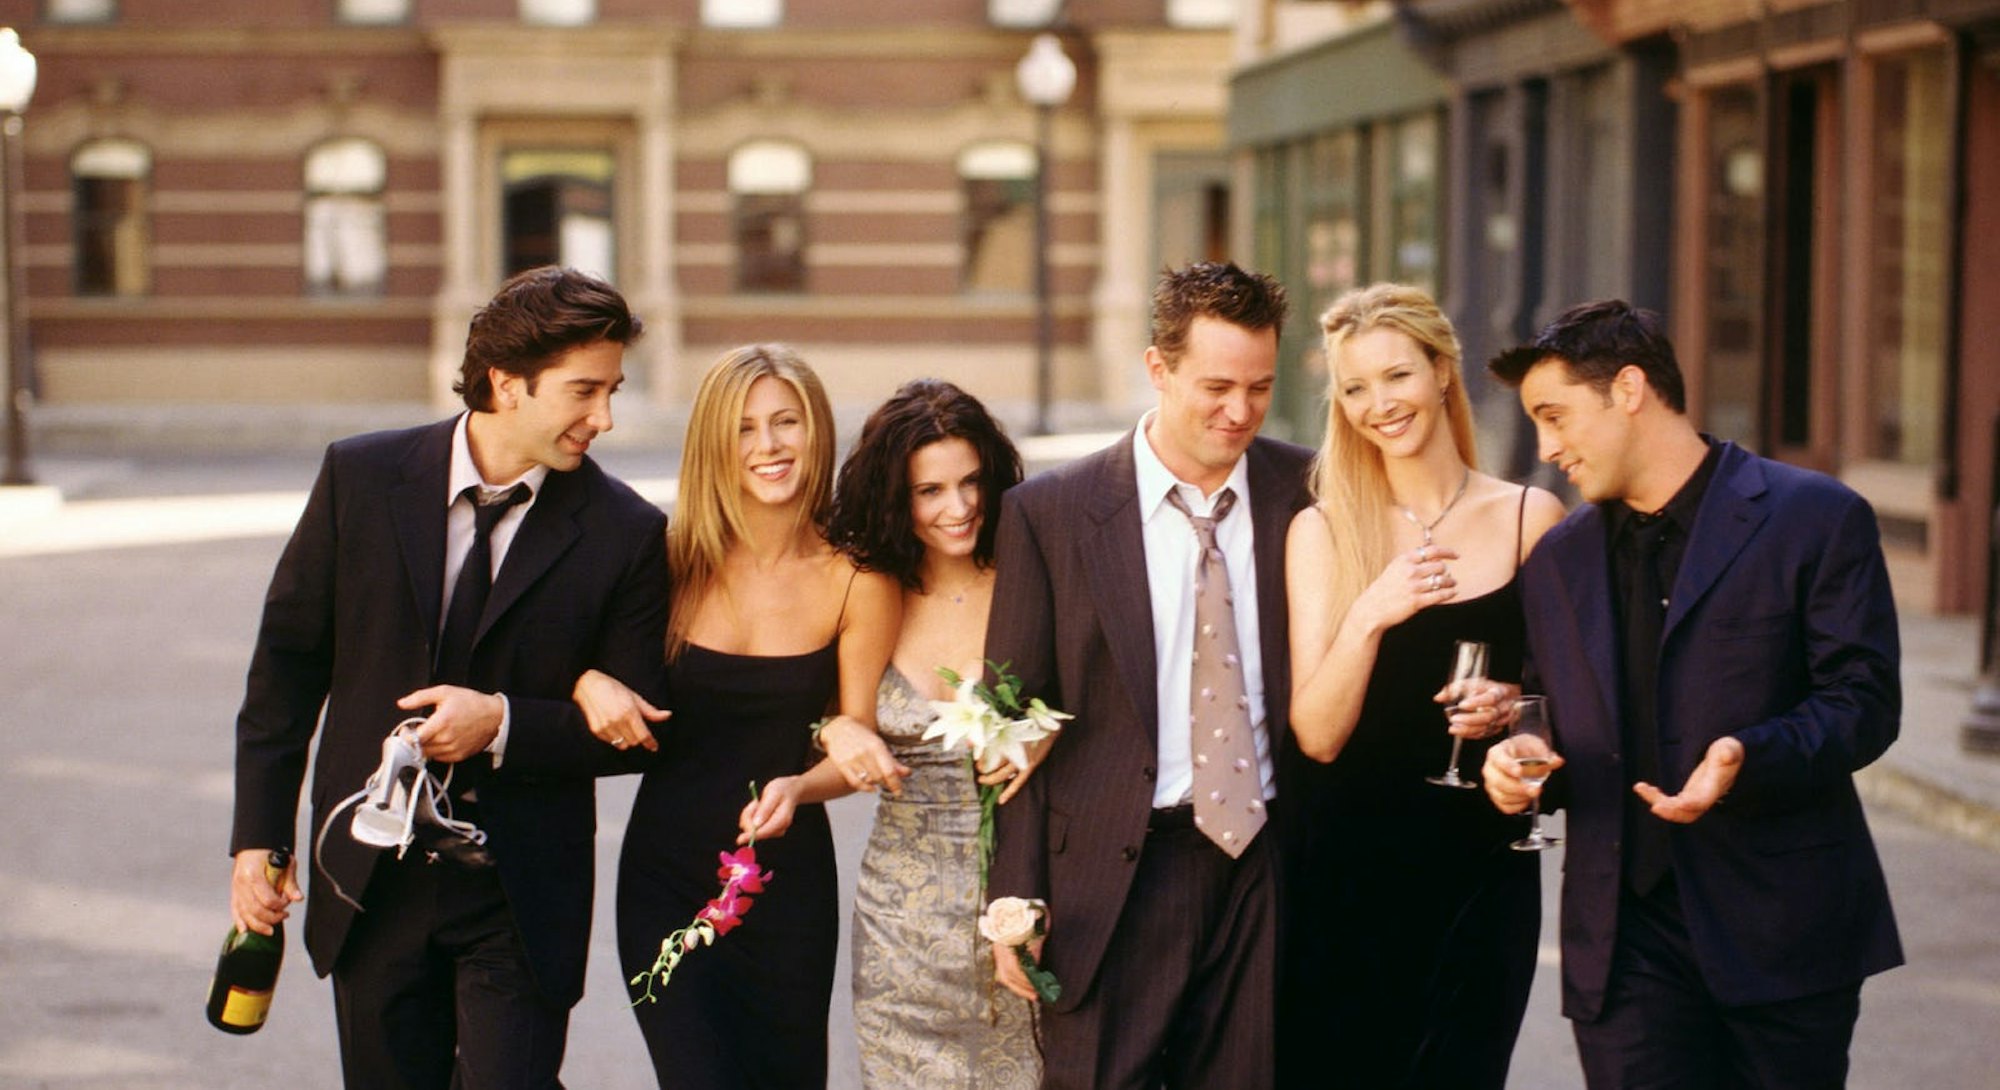 Main cast of the "Friends" sitcom